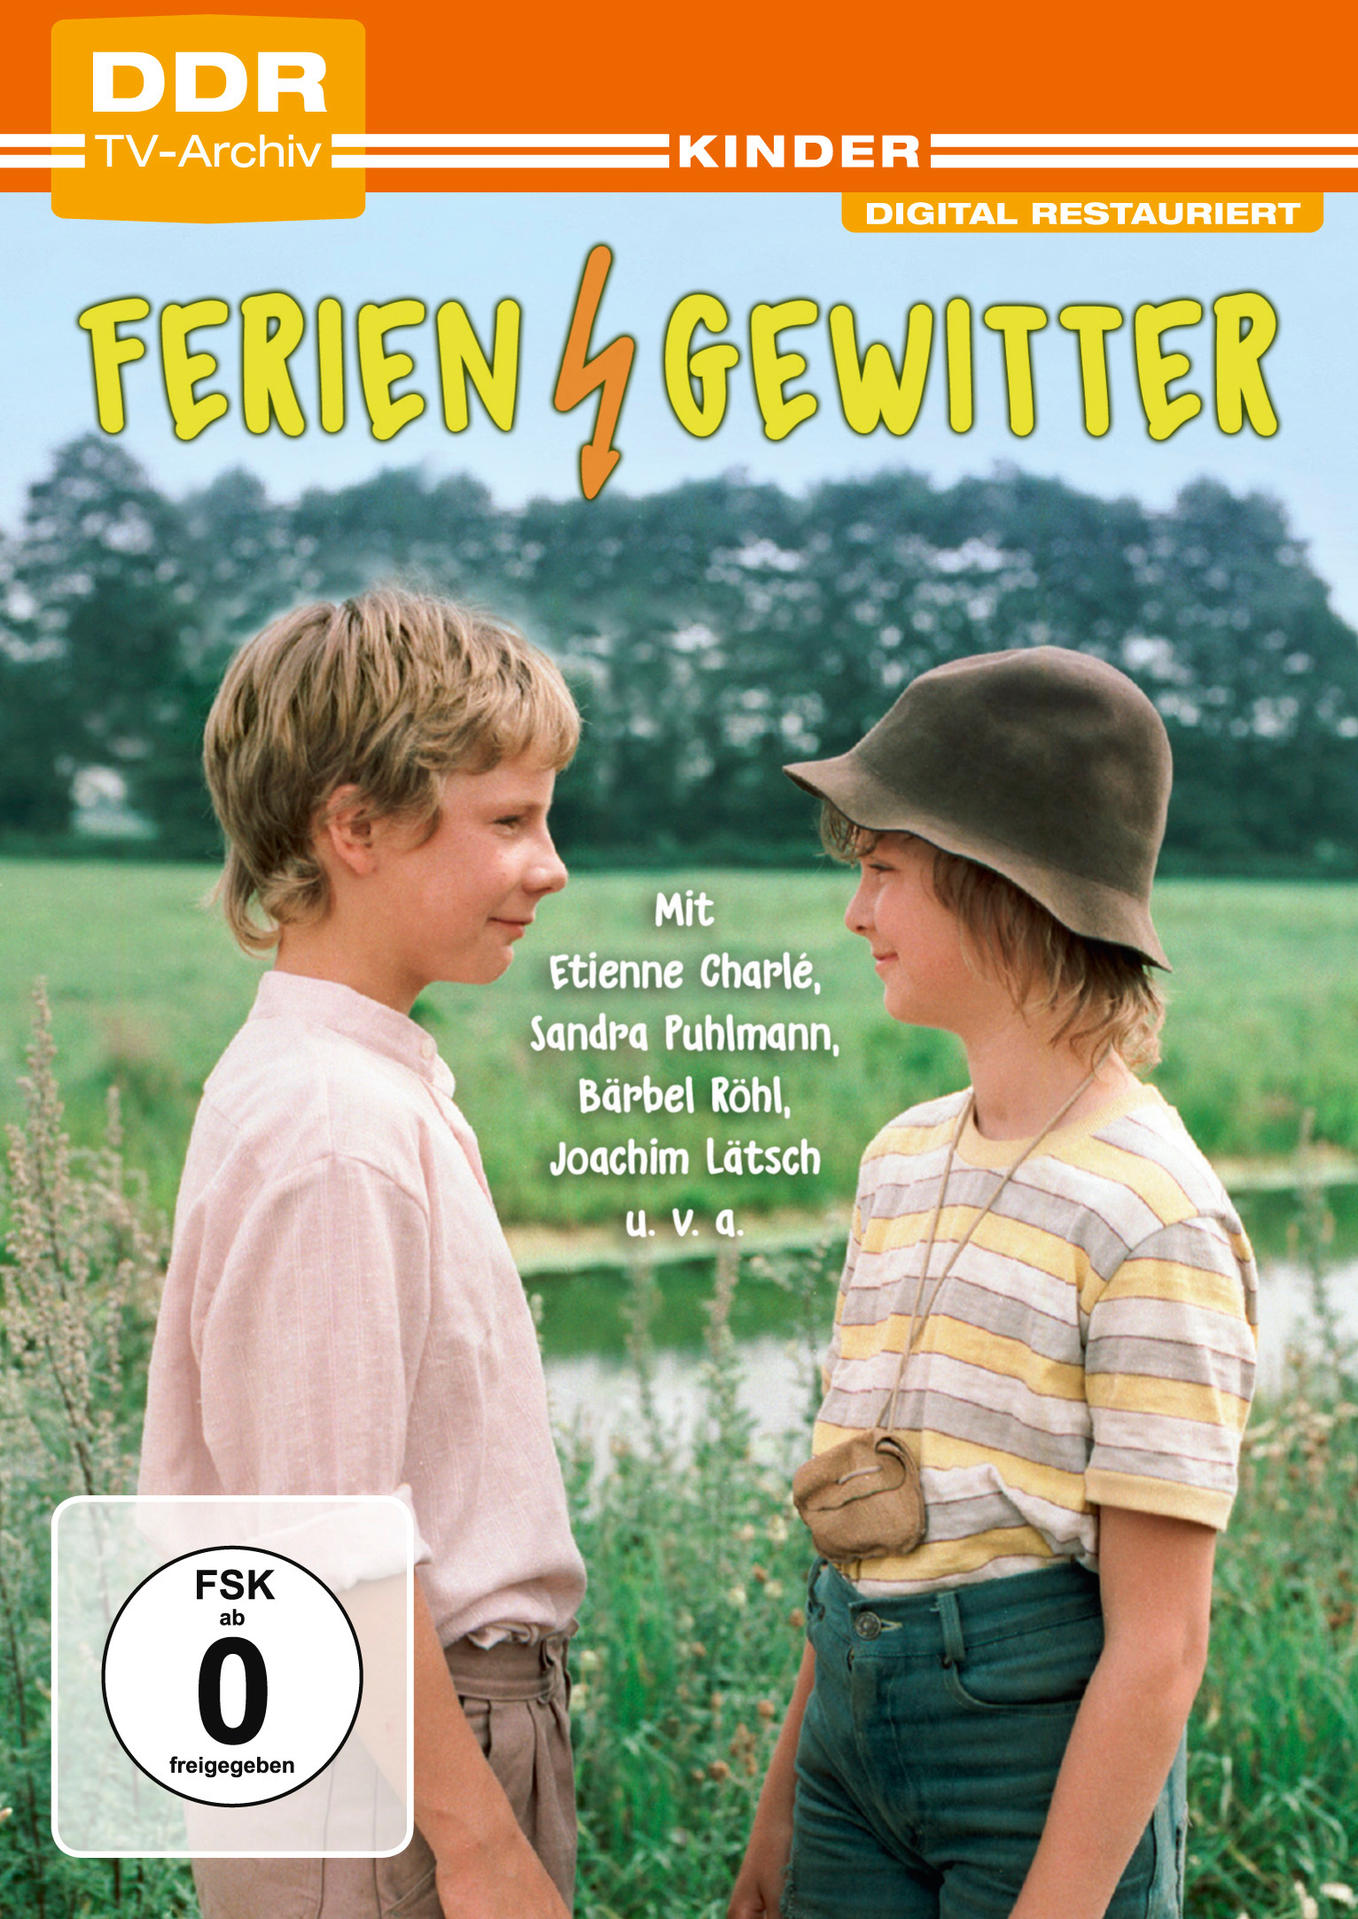 TV-Archiv) DVD Feriengewitter (DDR